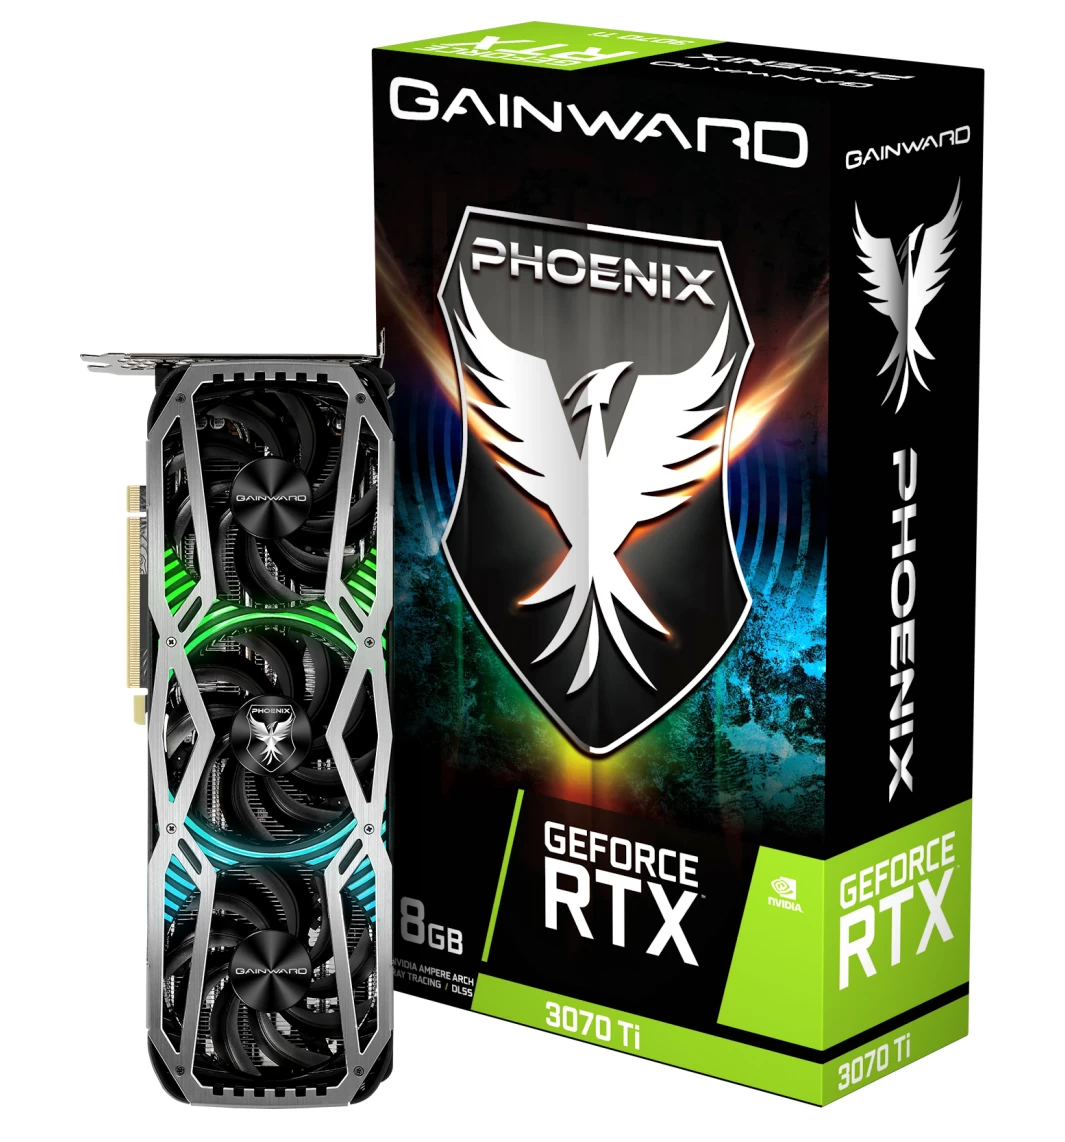 Gainward Geforce RTX 3070 Ti Phoenix Package